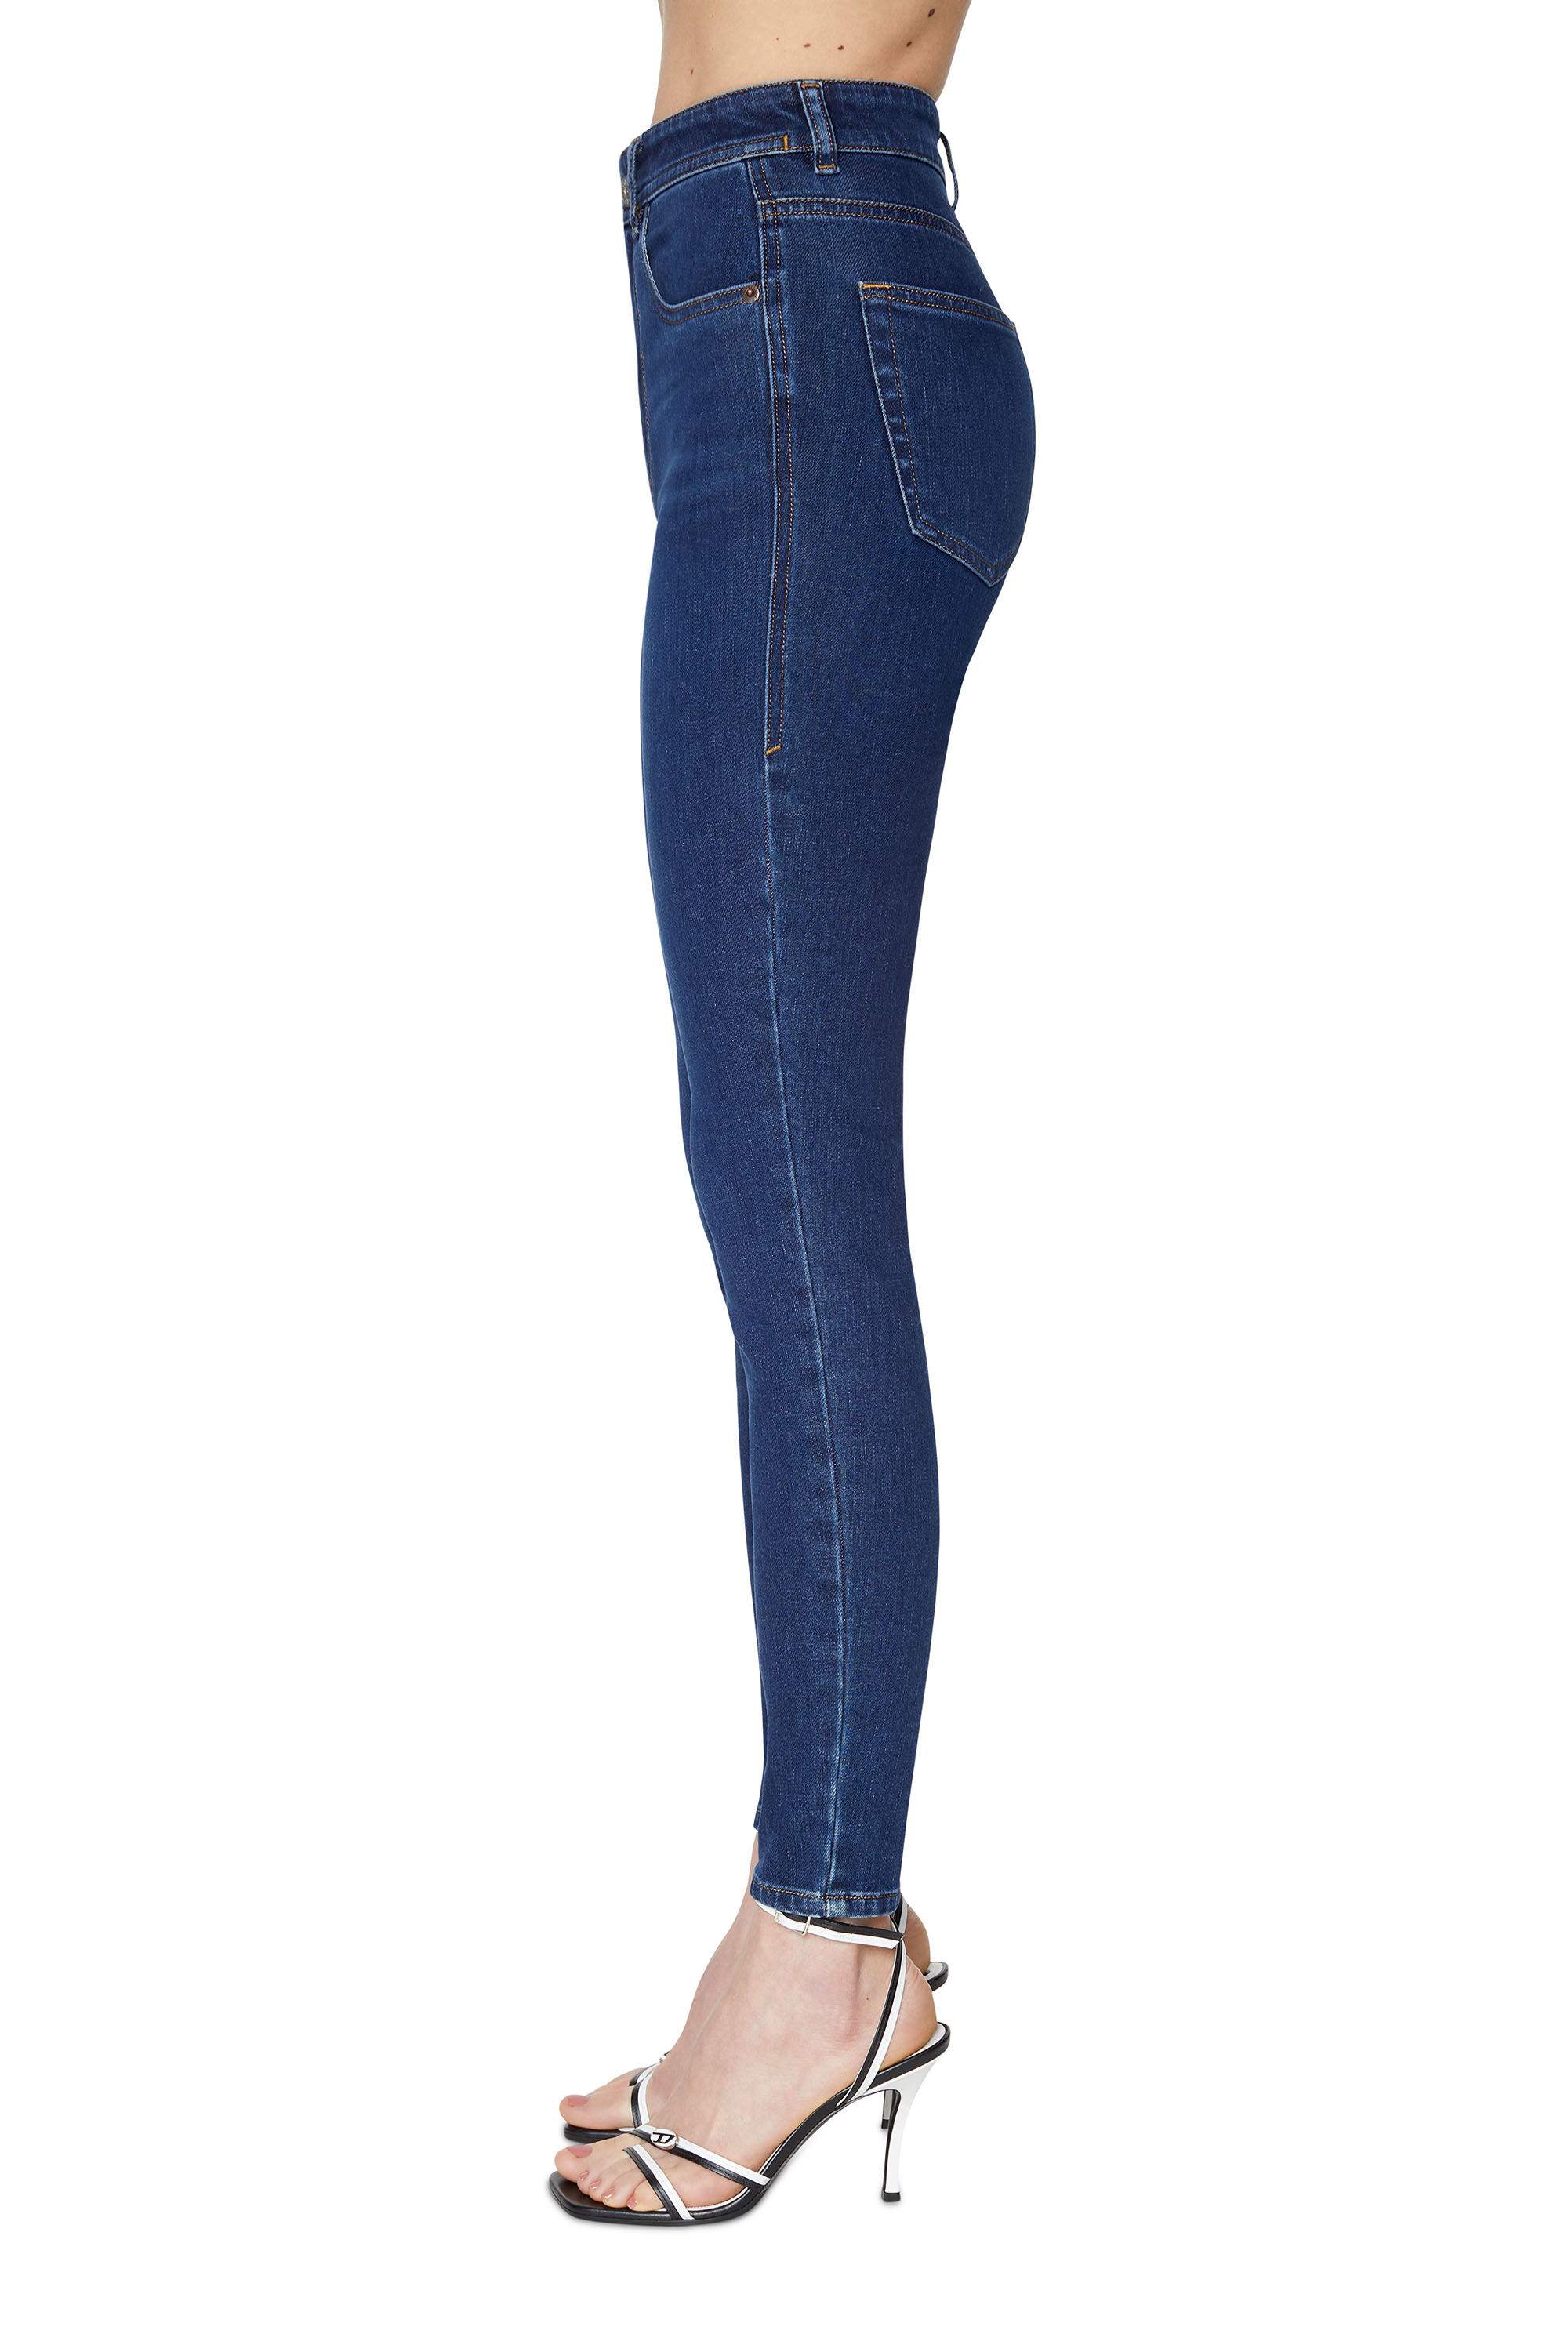 discount 52% Primark Jeggings & Skinny & Slim WOMEN FASHION Jeans NO STYLE Navy Blue 36                  EU 